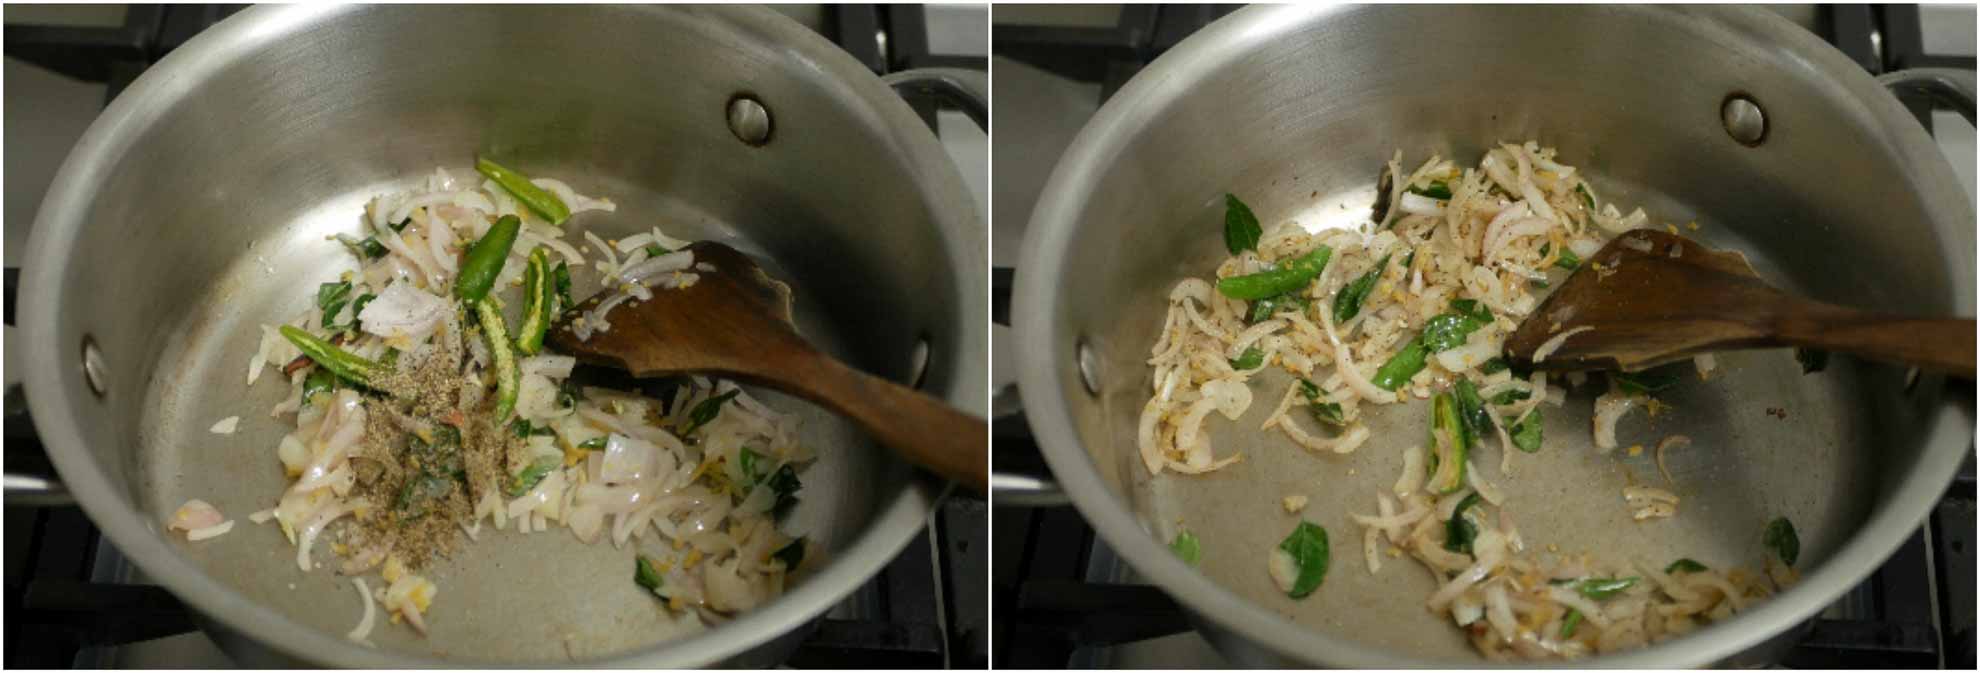 kerala-mutton-stew-recipe-for-appam-7